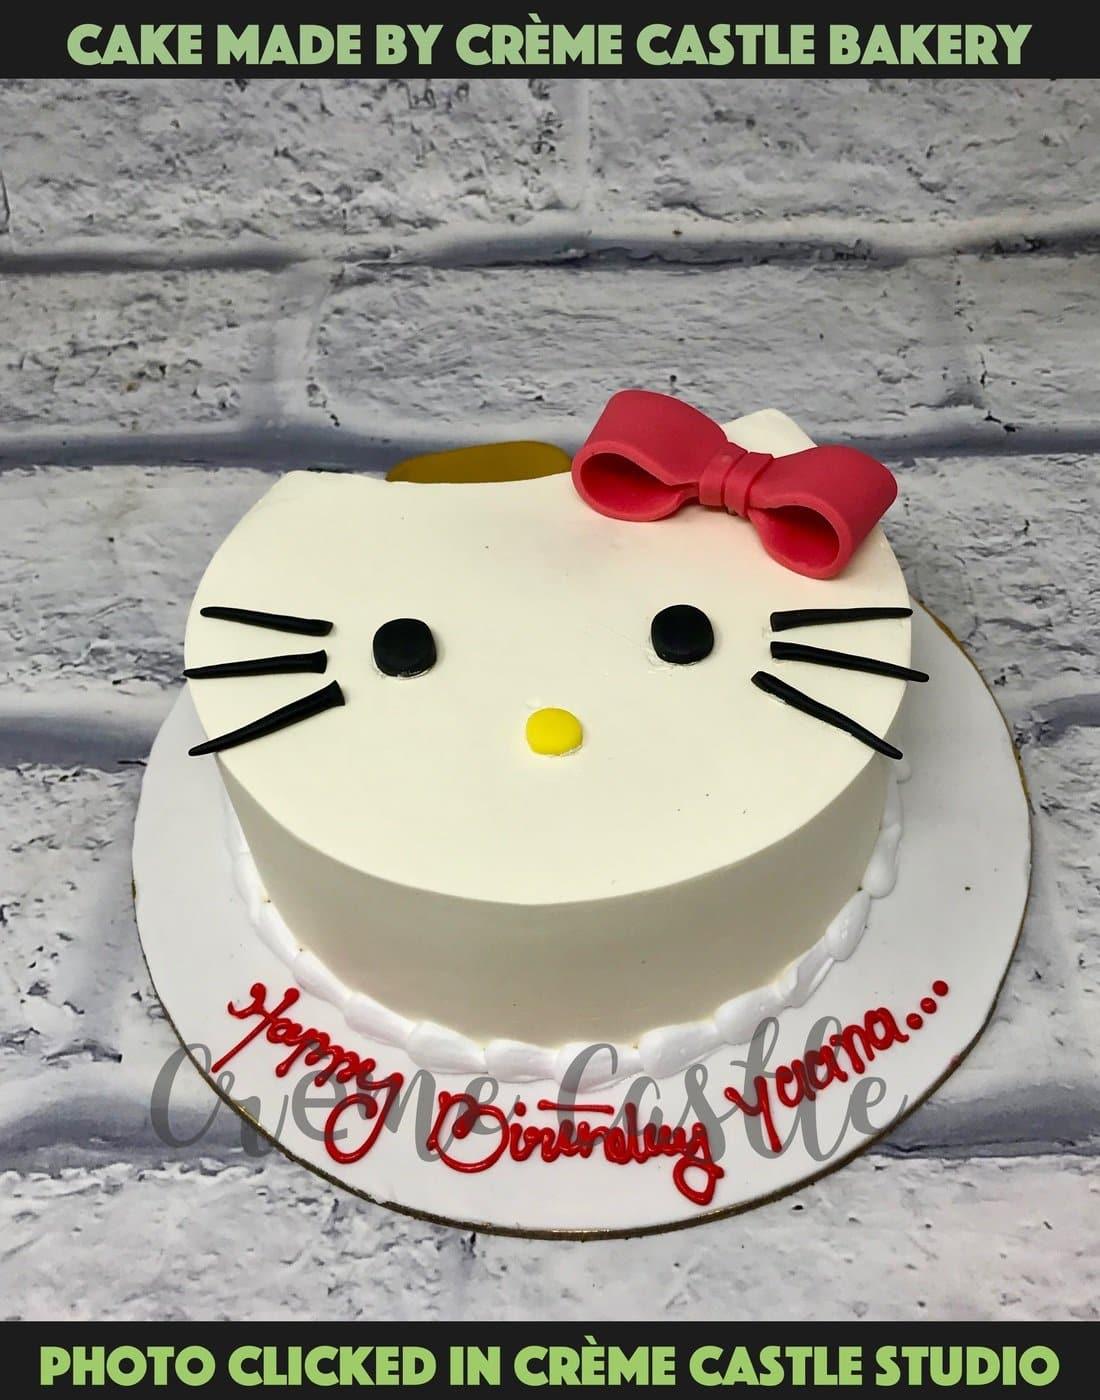 Order Hello Kitty Cakes Online | Cute Hello Kitty Theme Cake | Customized Kitty  Cake Design - The Baker's Table